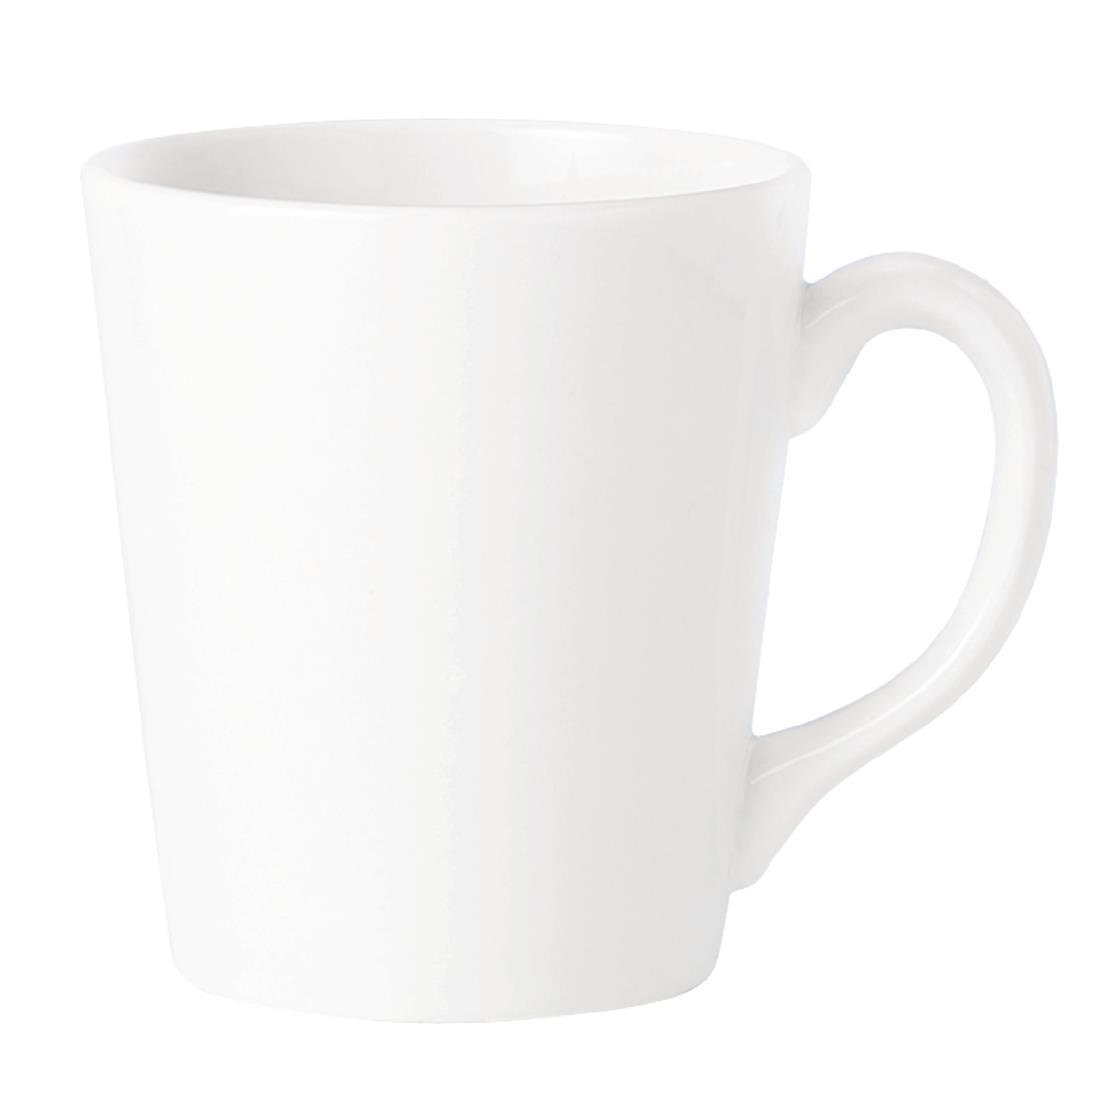 Steelite Simplicity White Coffeehouse Mugs 262ml (Pack of 36) - V9114  - 1